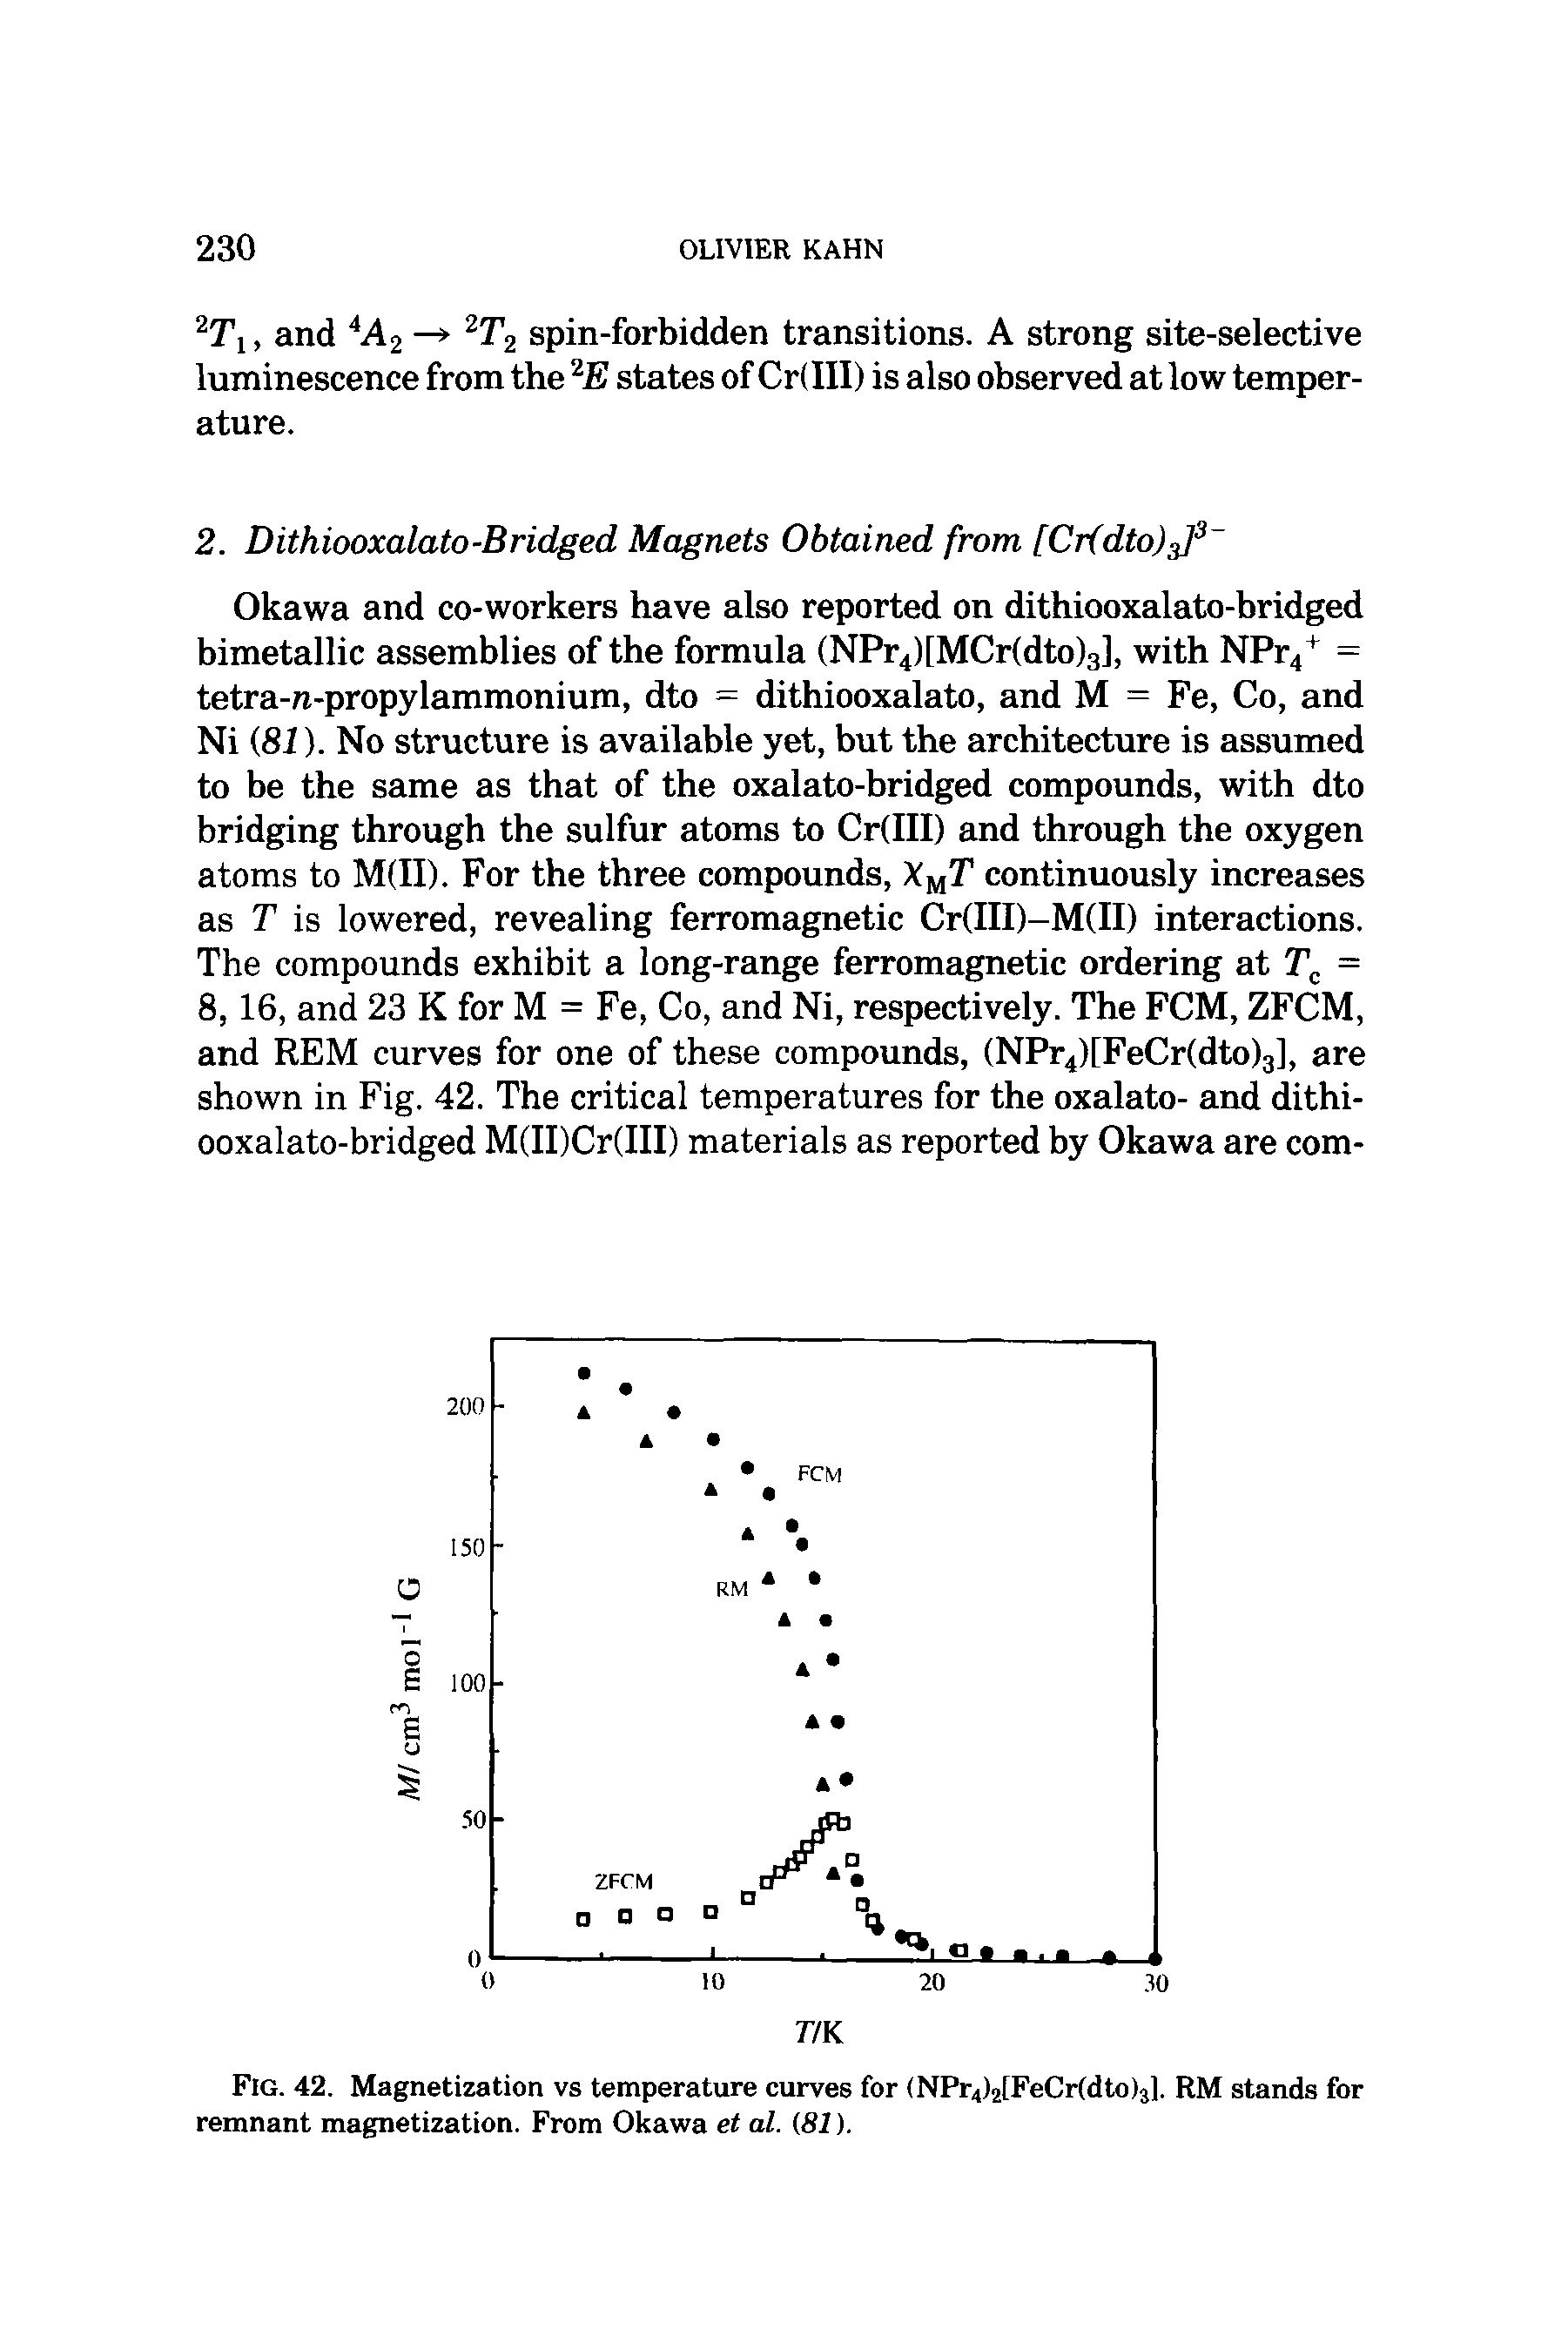 Fig. 42. Magnetization vs temperature curves for (NPr4)2[FeCr(dto)3). RM stands for remnant magnetization. From Okawa et al. 81).